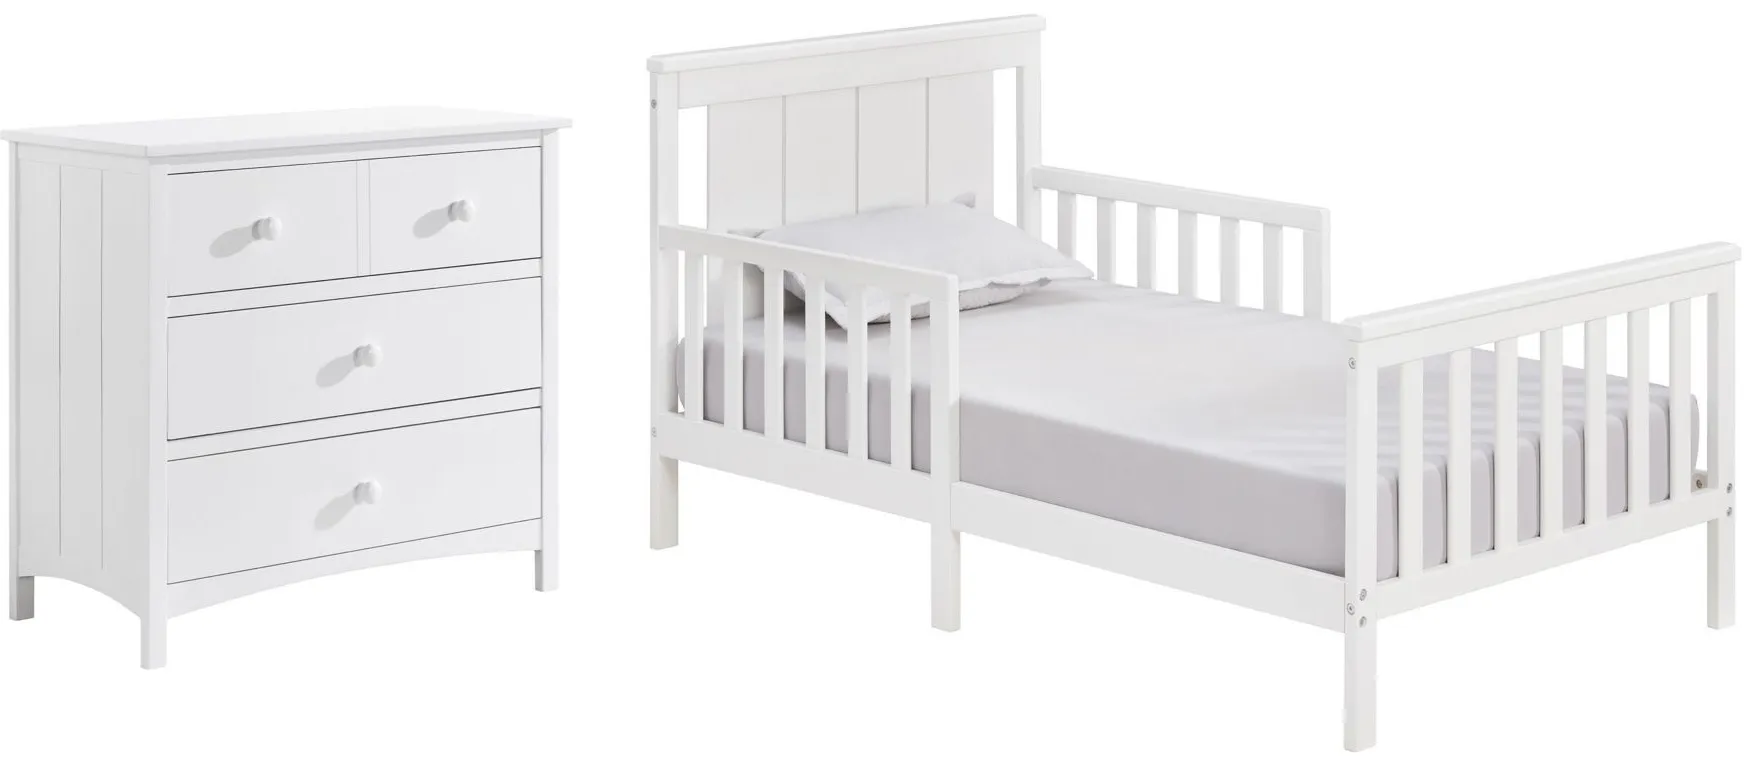 Oxford Baby Lazio Toddler Bed and Dresser Set - 2 pc. in Snow White by M DESIGN VILLAGE